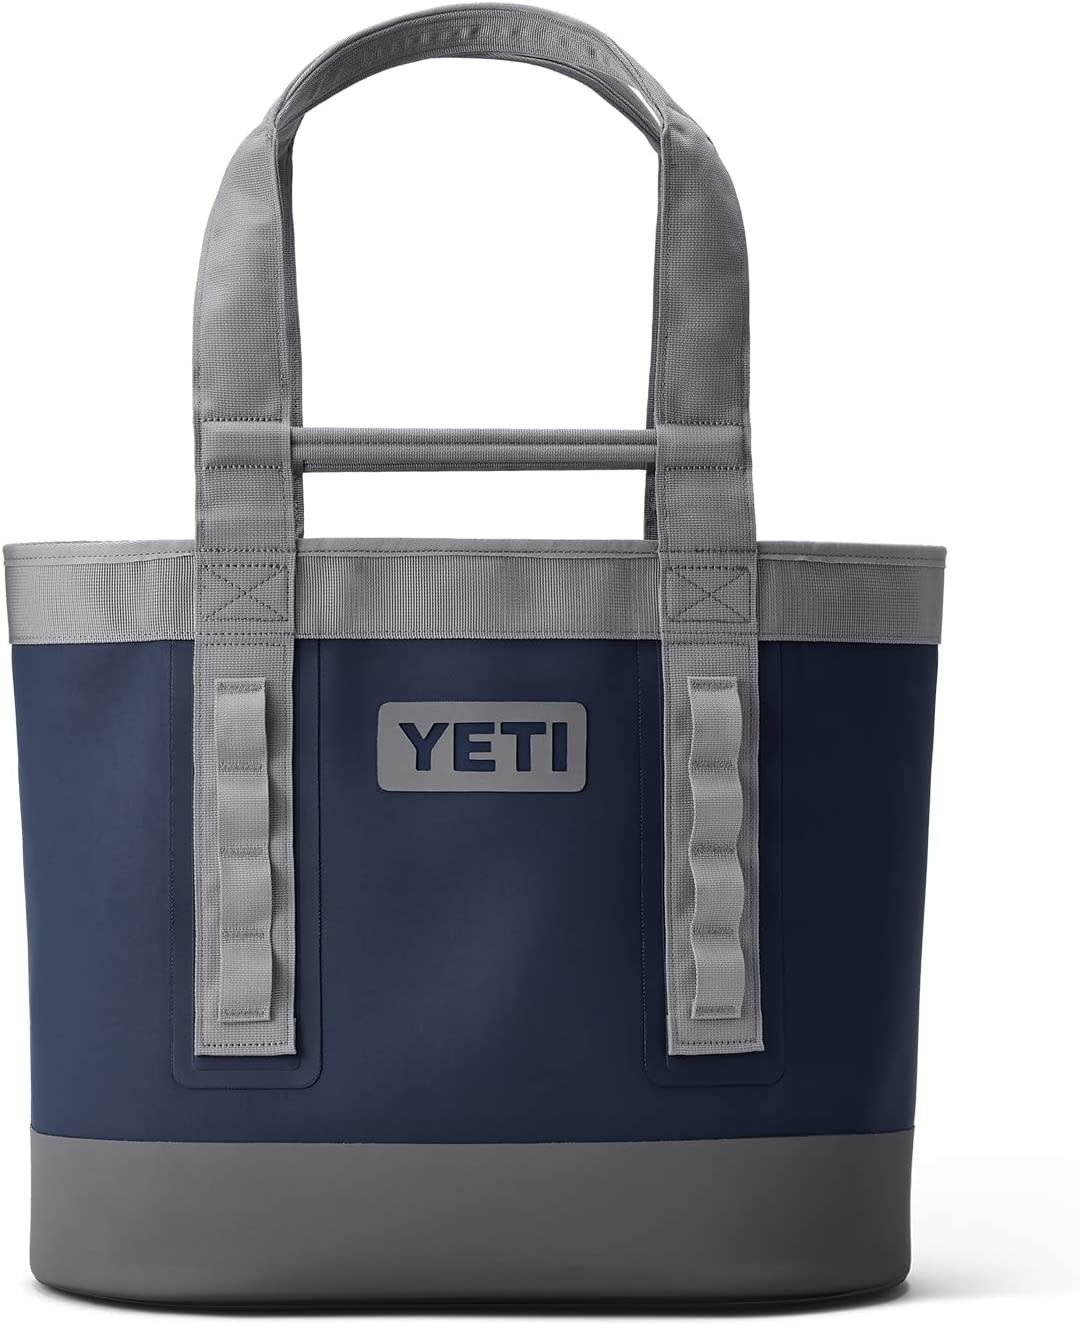 Yeti Yeti Camino Carryall 35,  All-Purpose Utility, Boat and Beach Tote Bag, Durable, Waterproof